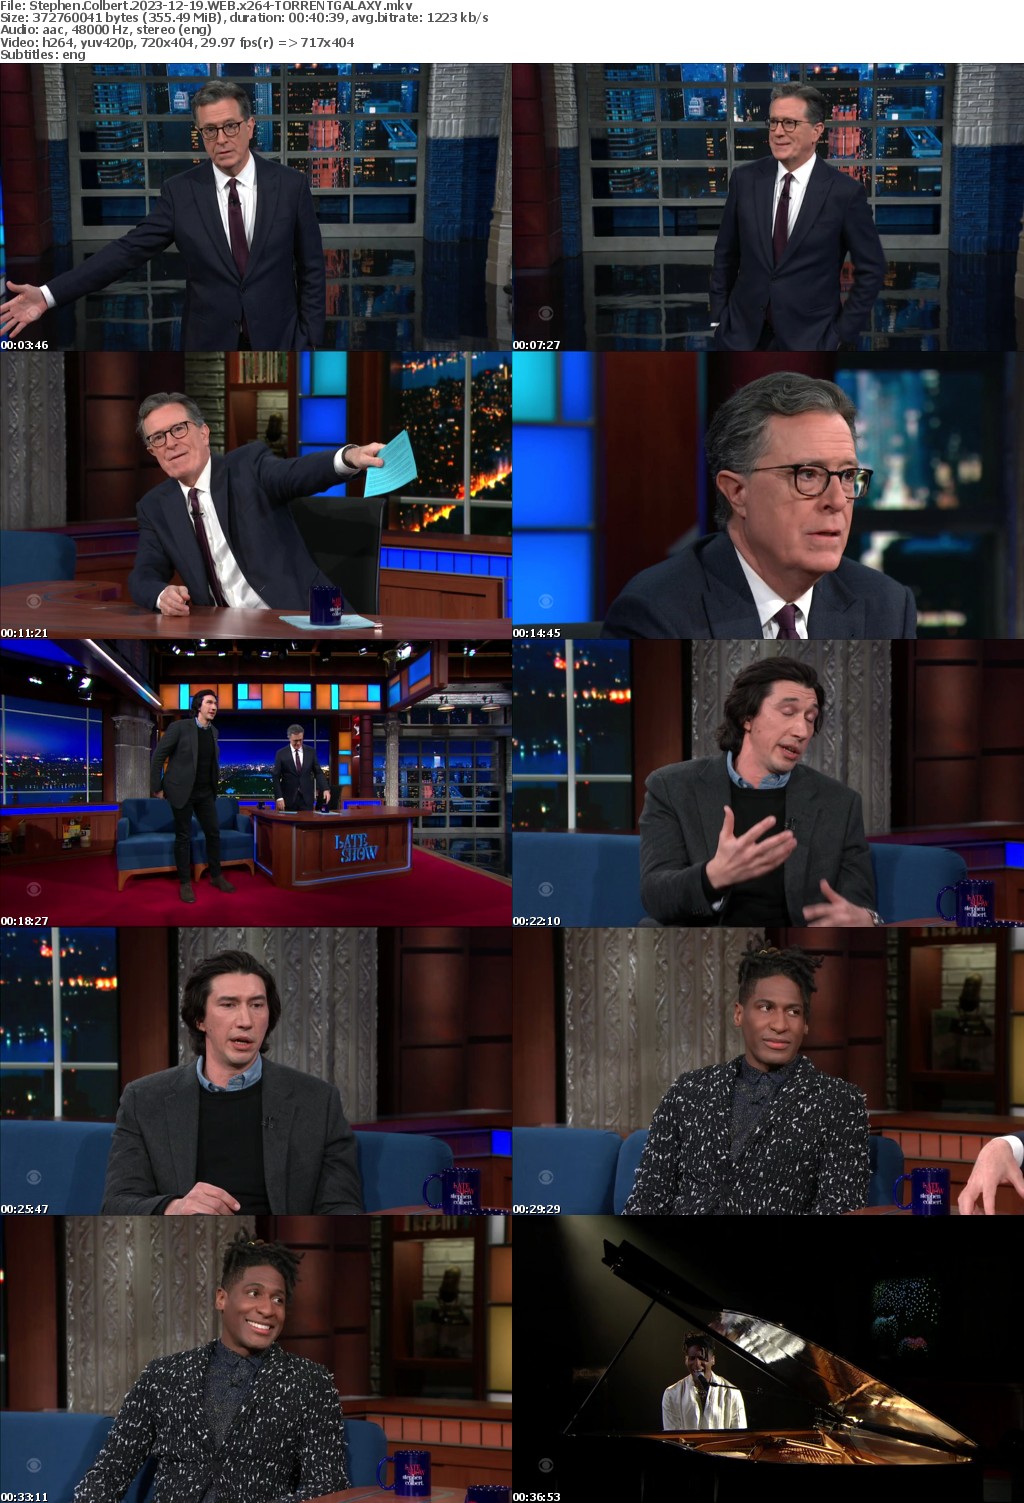 Stephen Colbert 2023-12-19 WEB x264-GALAXY